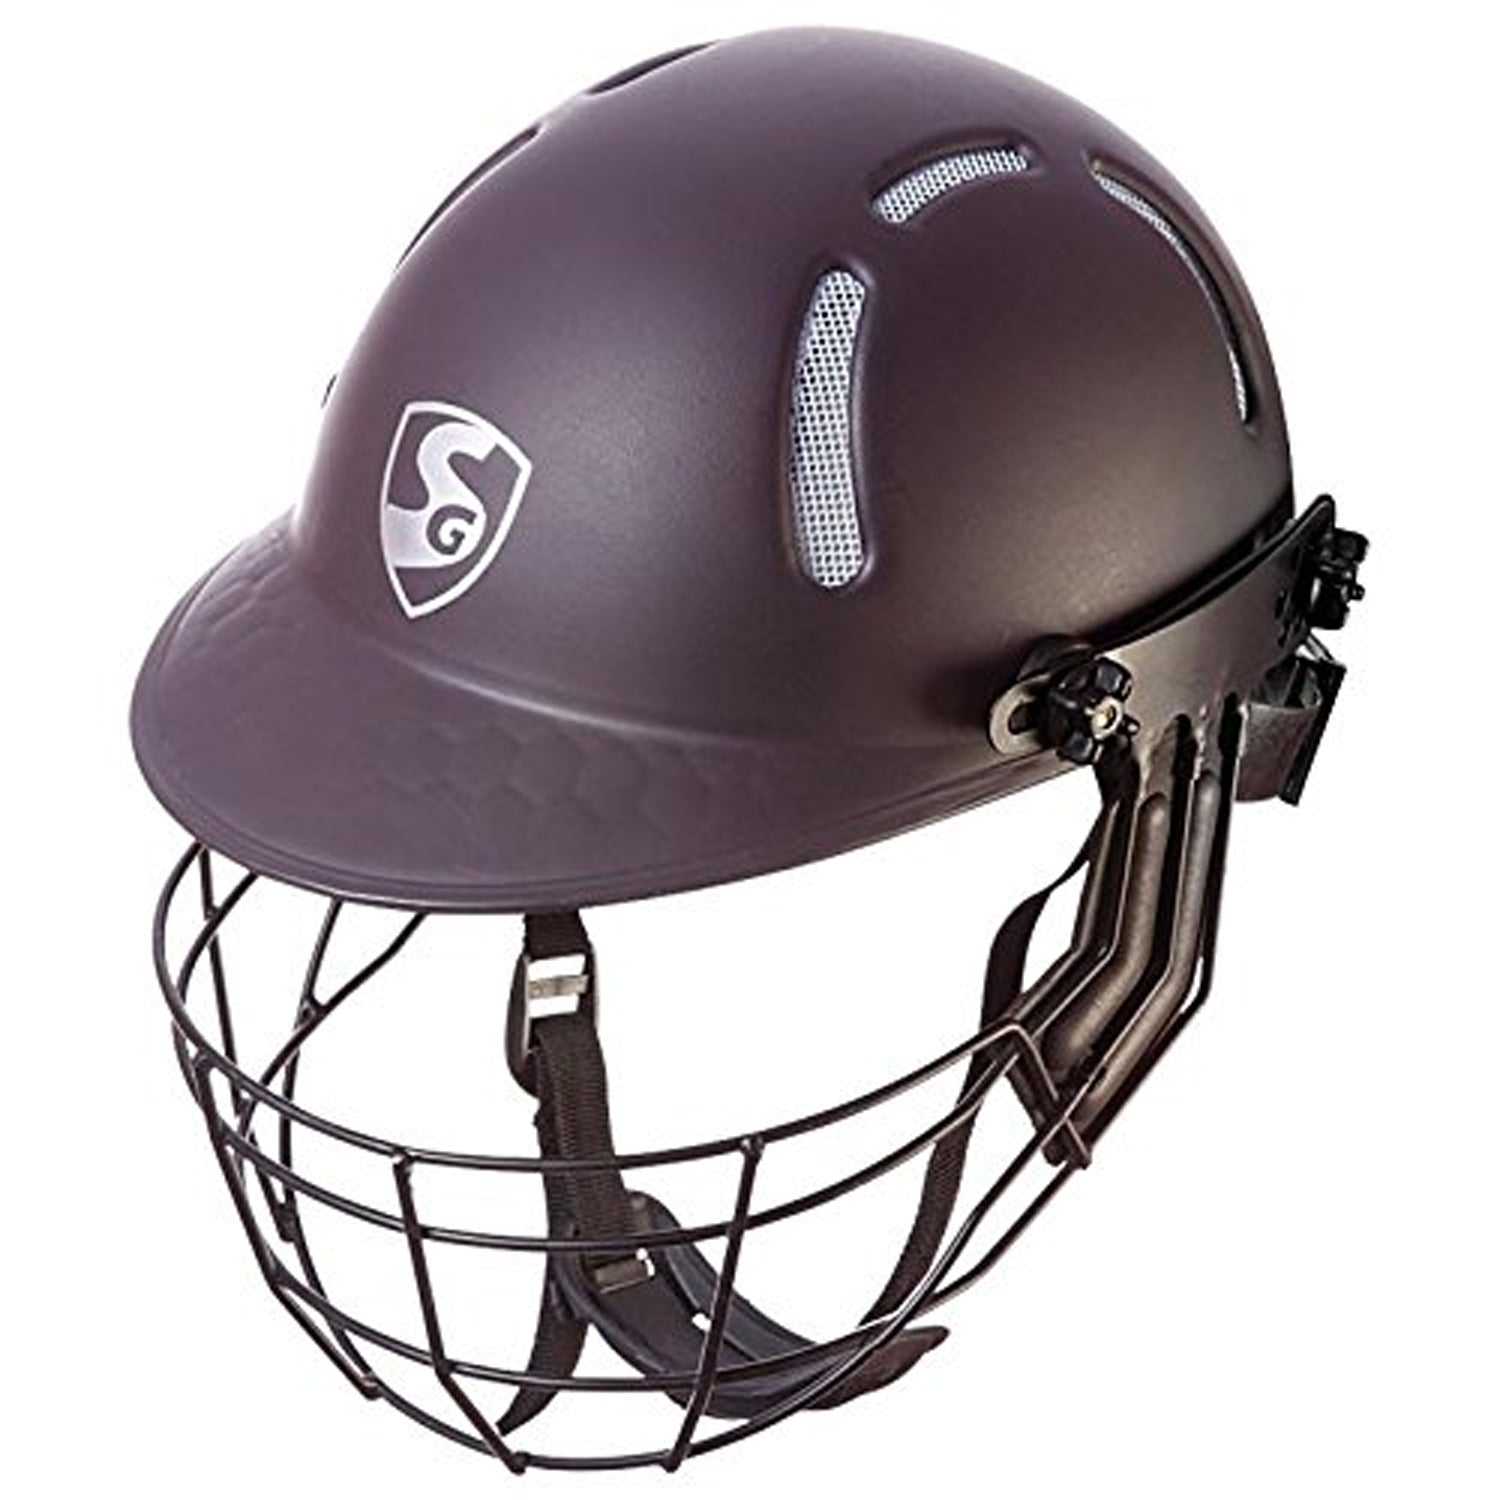 SG Aero Tech 2.0 Professional Cricket Helmet - Best Price online Prokicksports.com